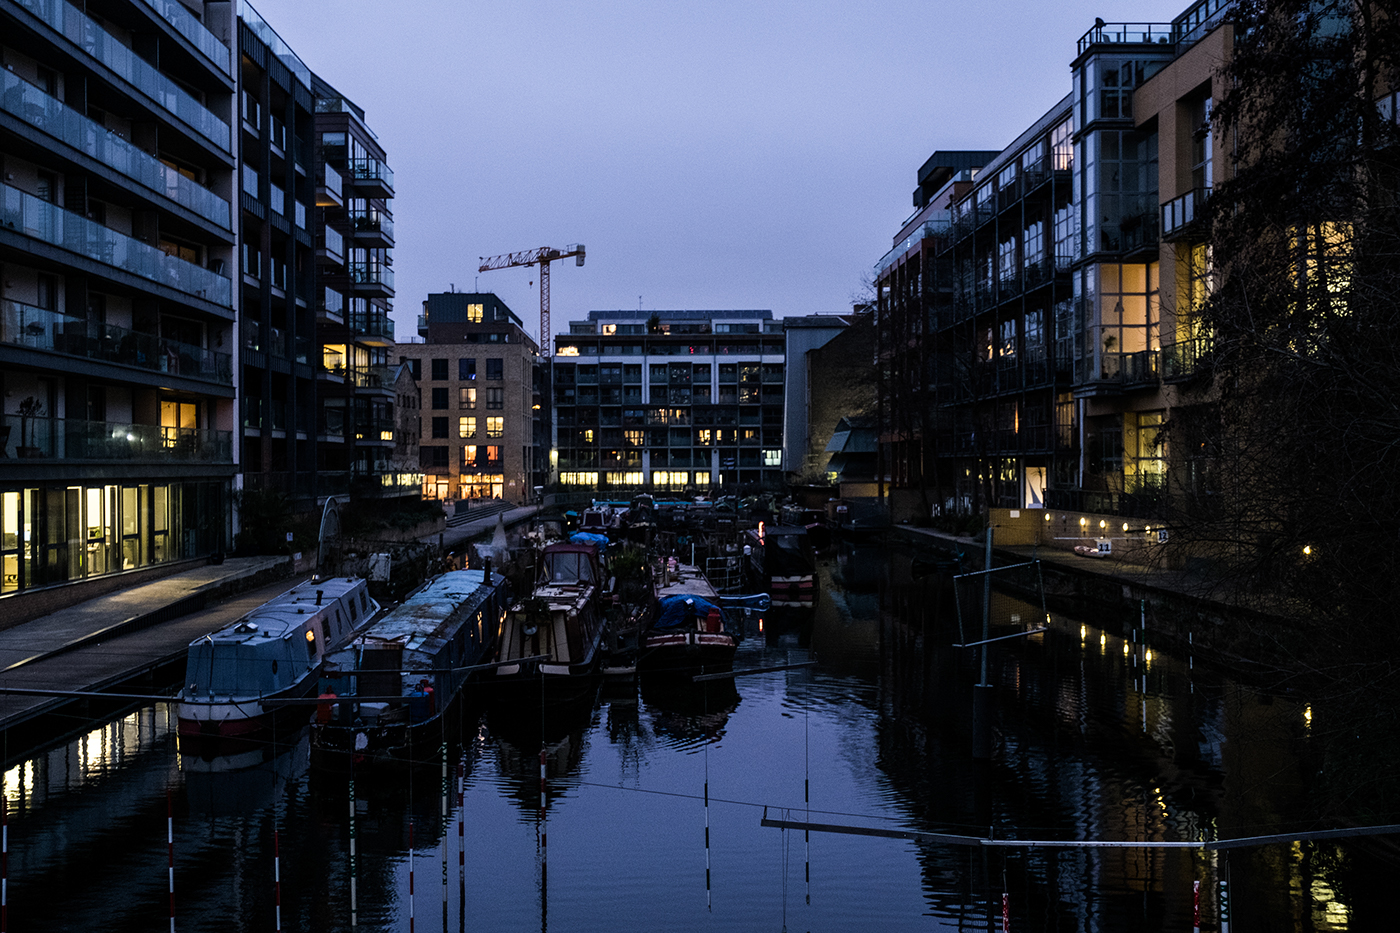 London Photography  street photography canal boathouse lifestyle streetart